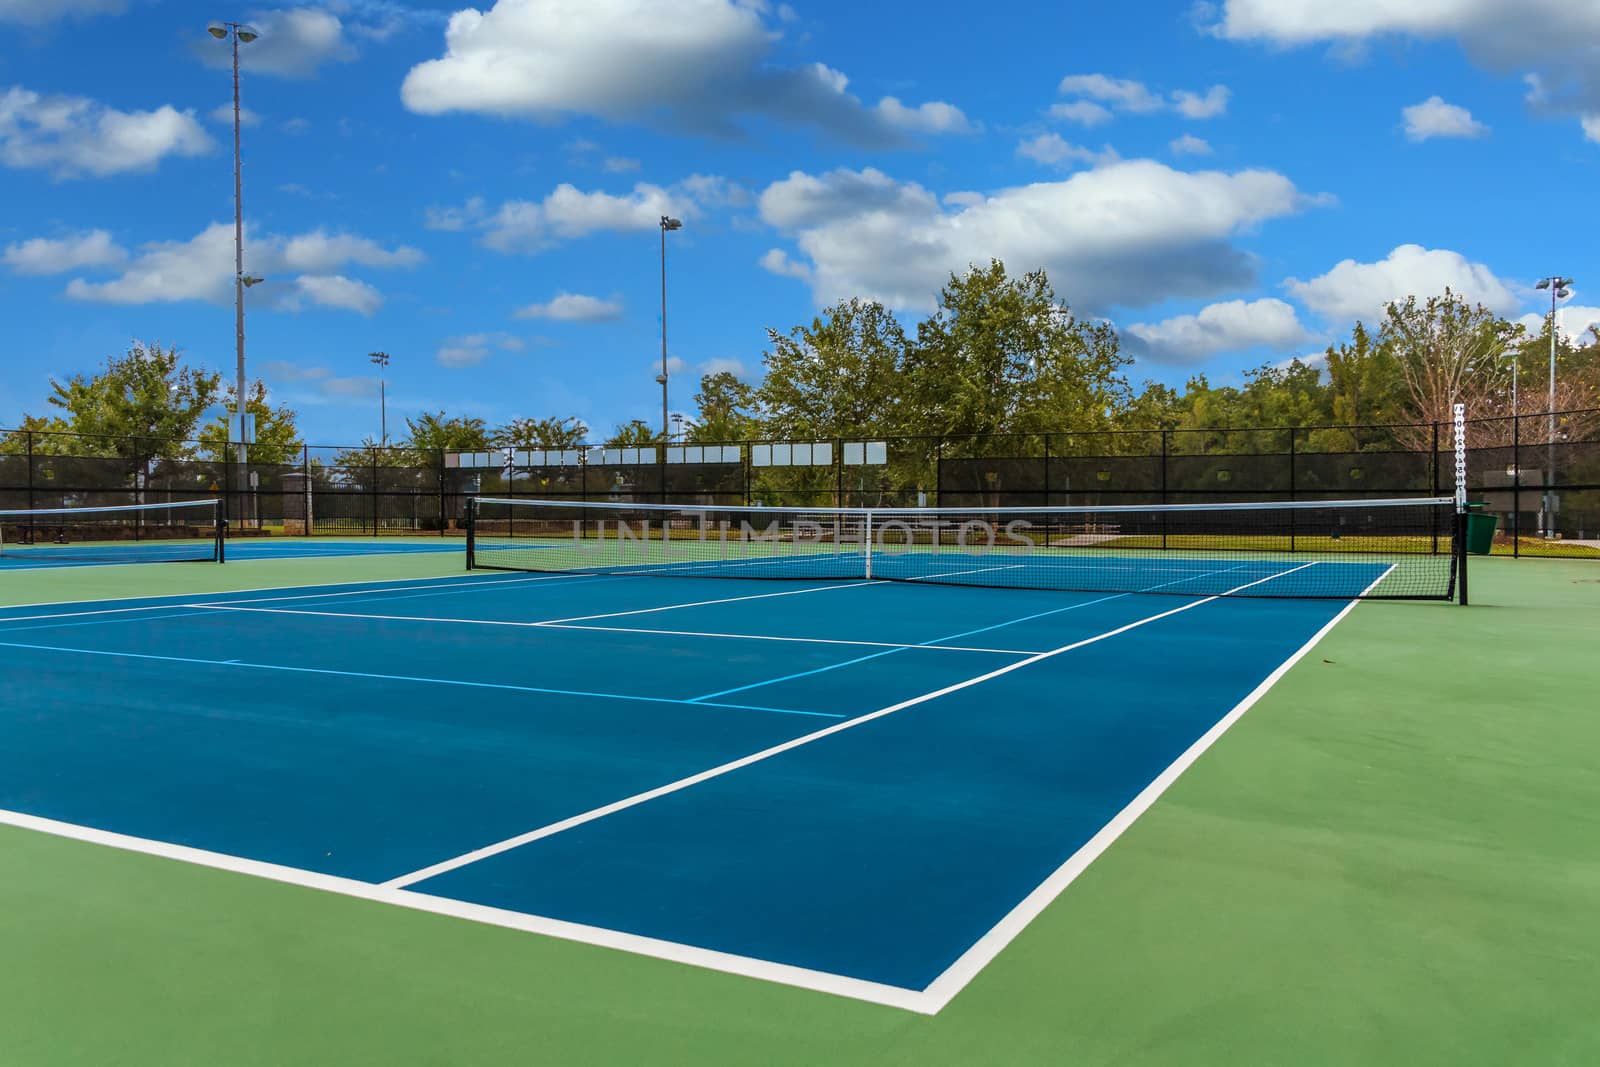 Tennis Courts from Corner by dbvirago